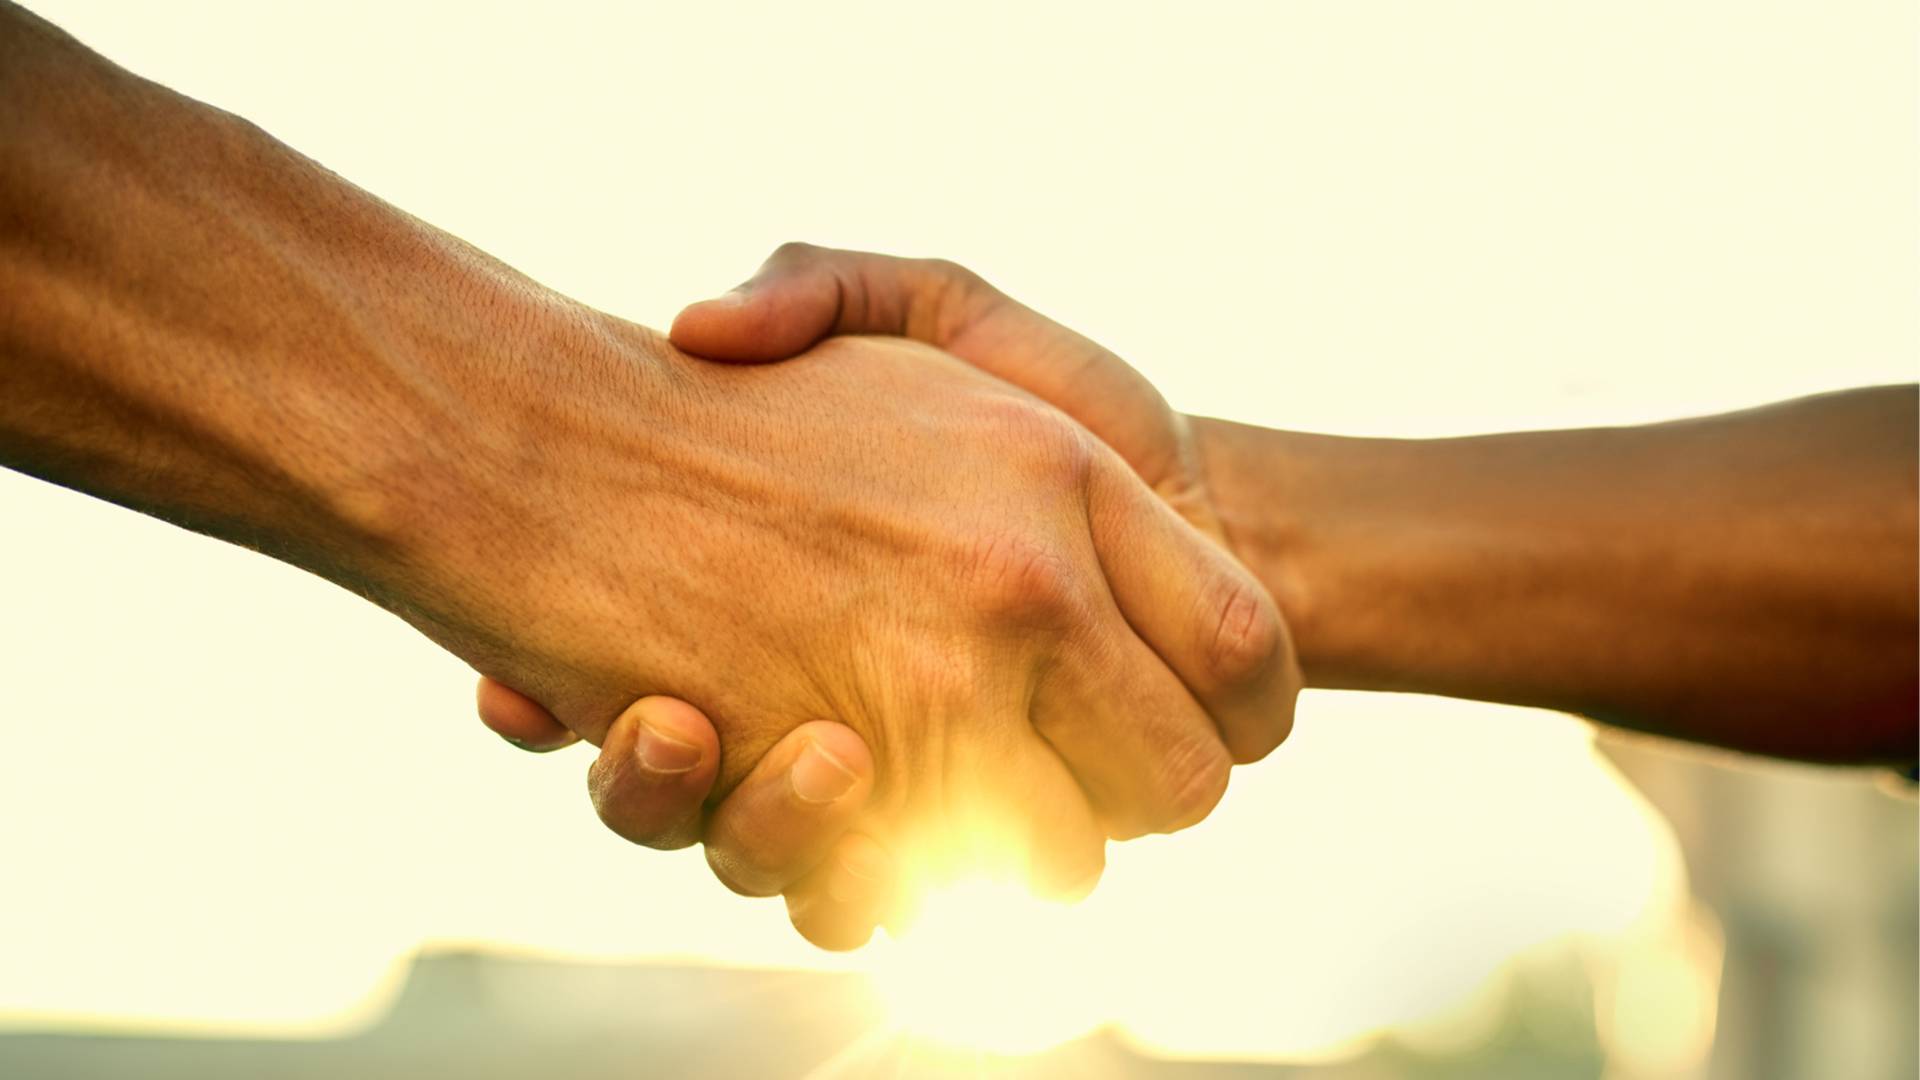 Handshake against a sunny background